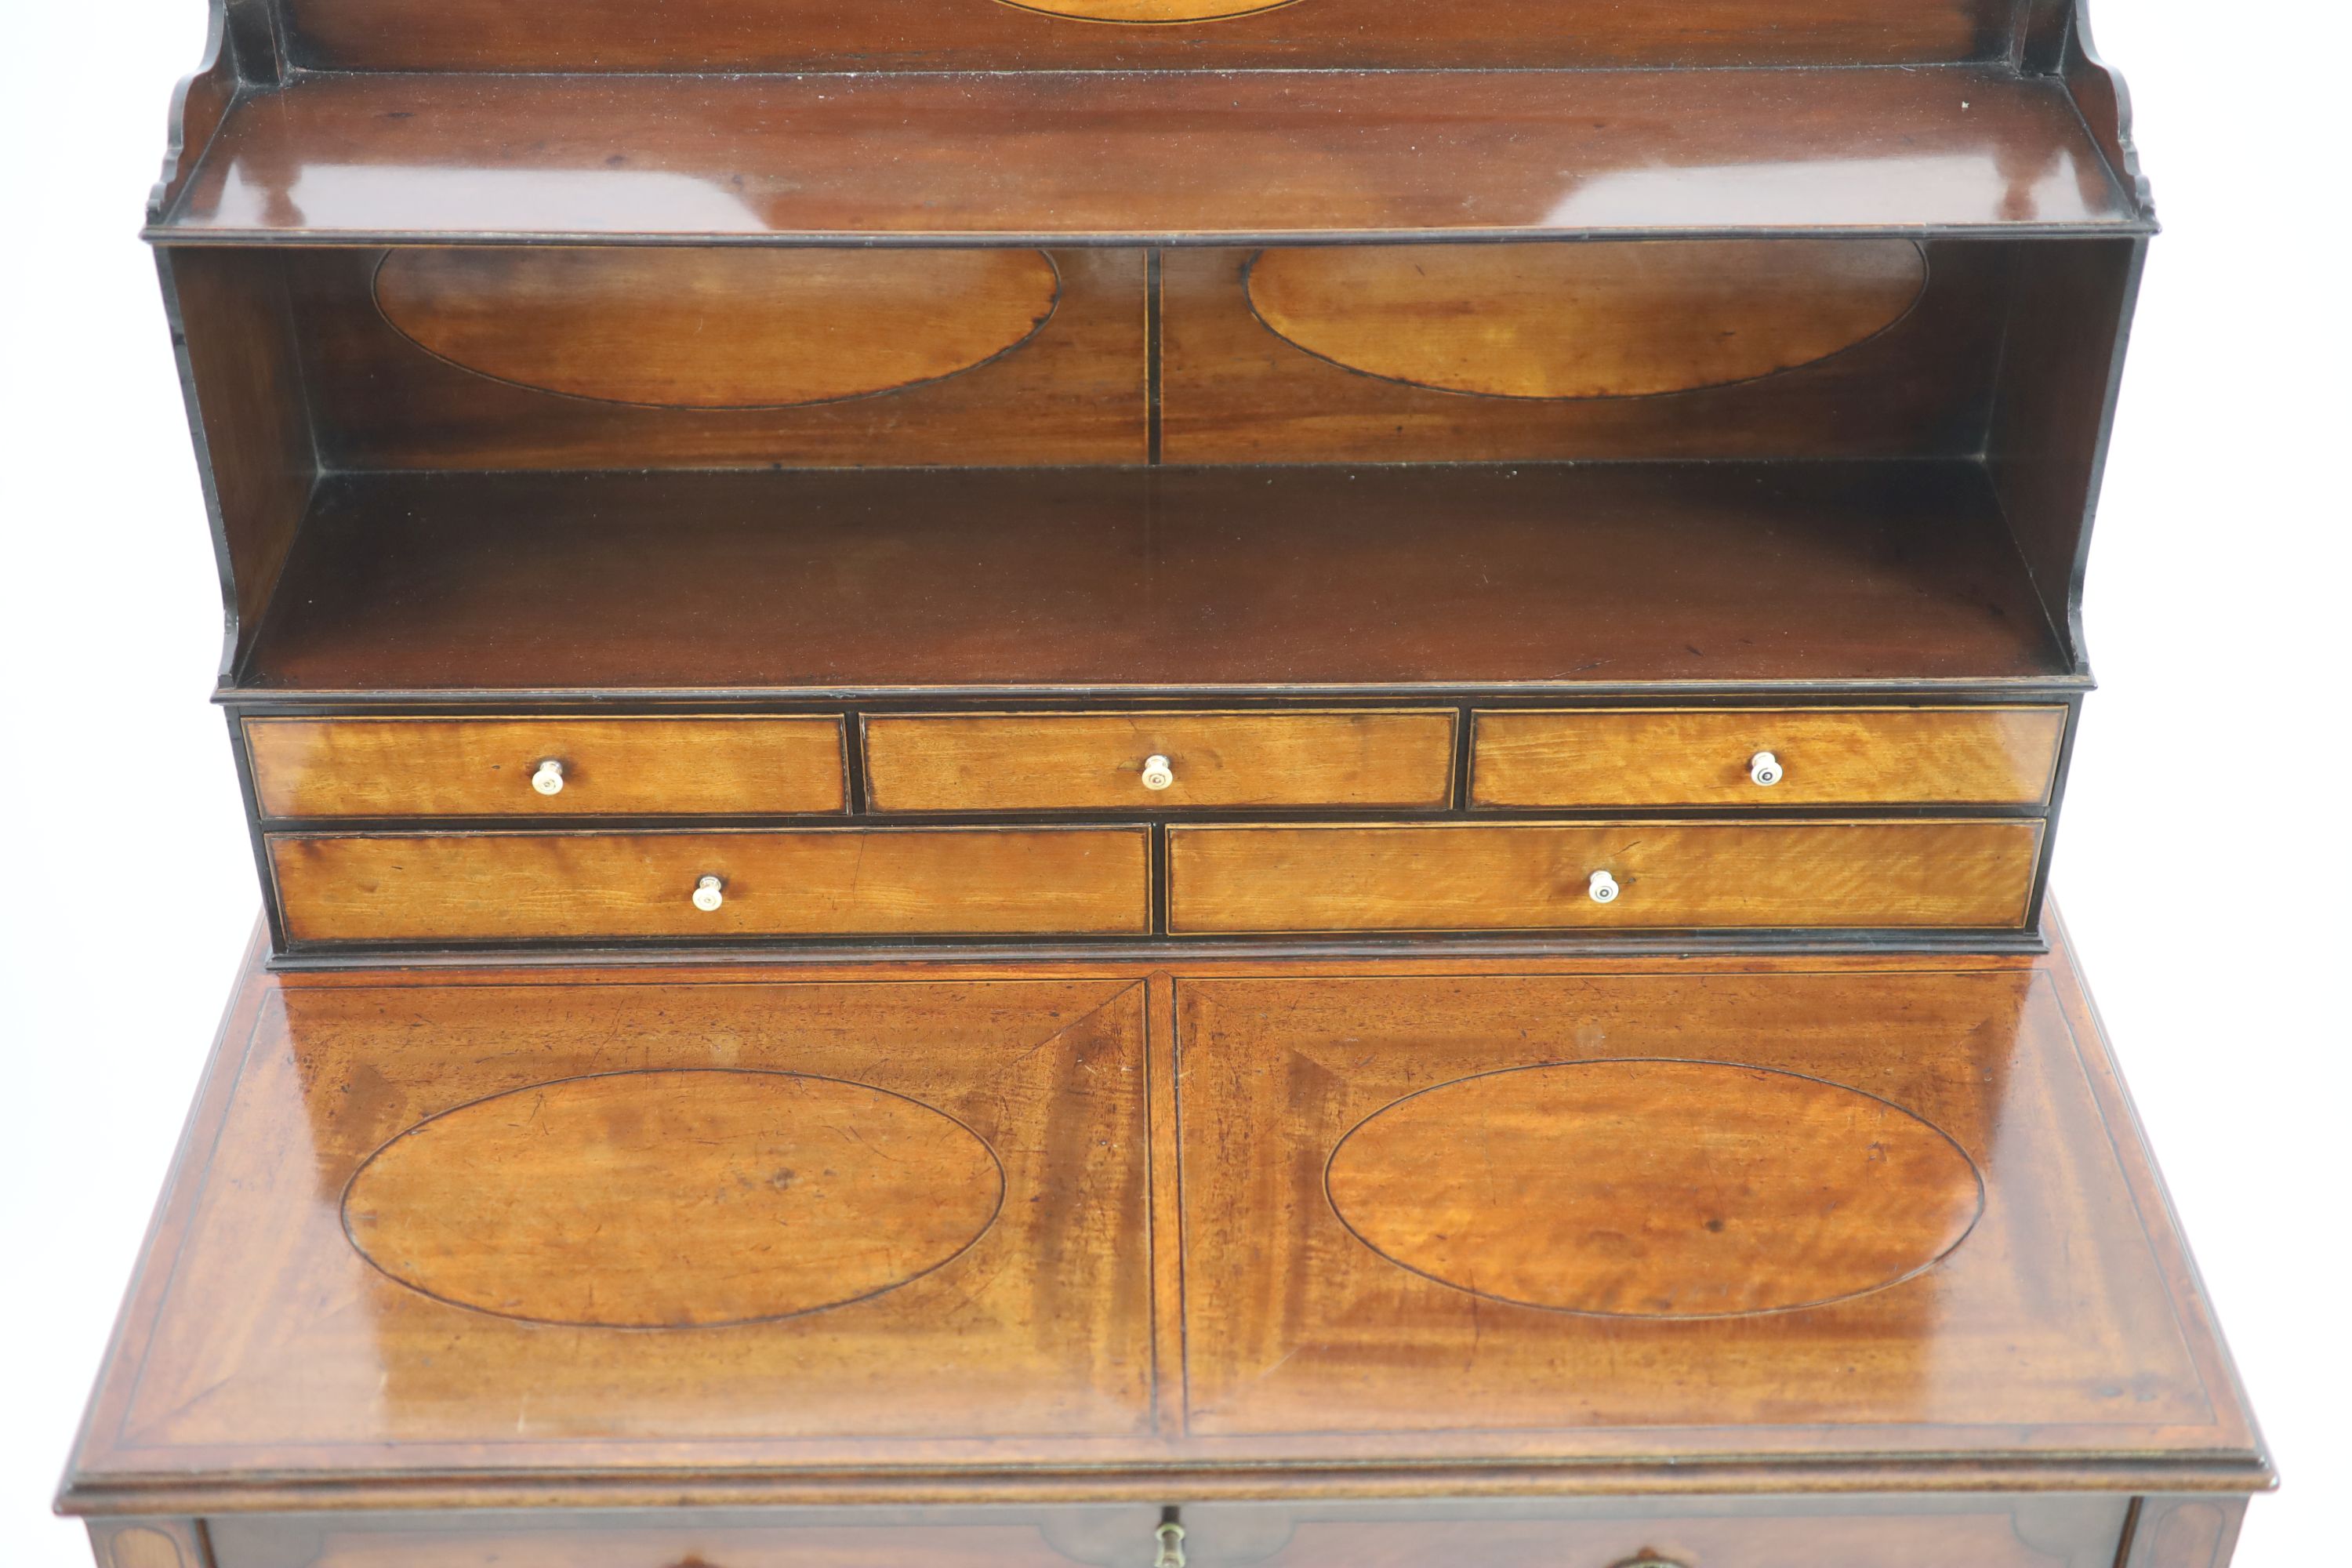 A George III Sheraton style mahogany and harewood bonheur du jour, W.78cm D.47cm H.130cm